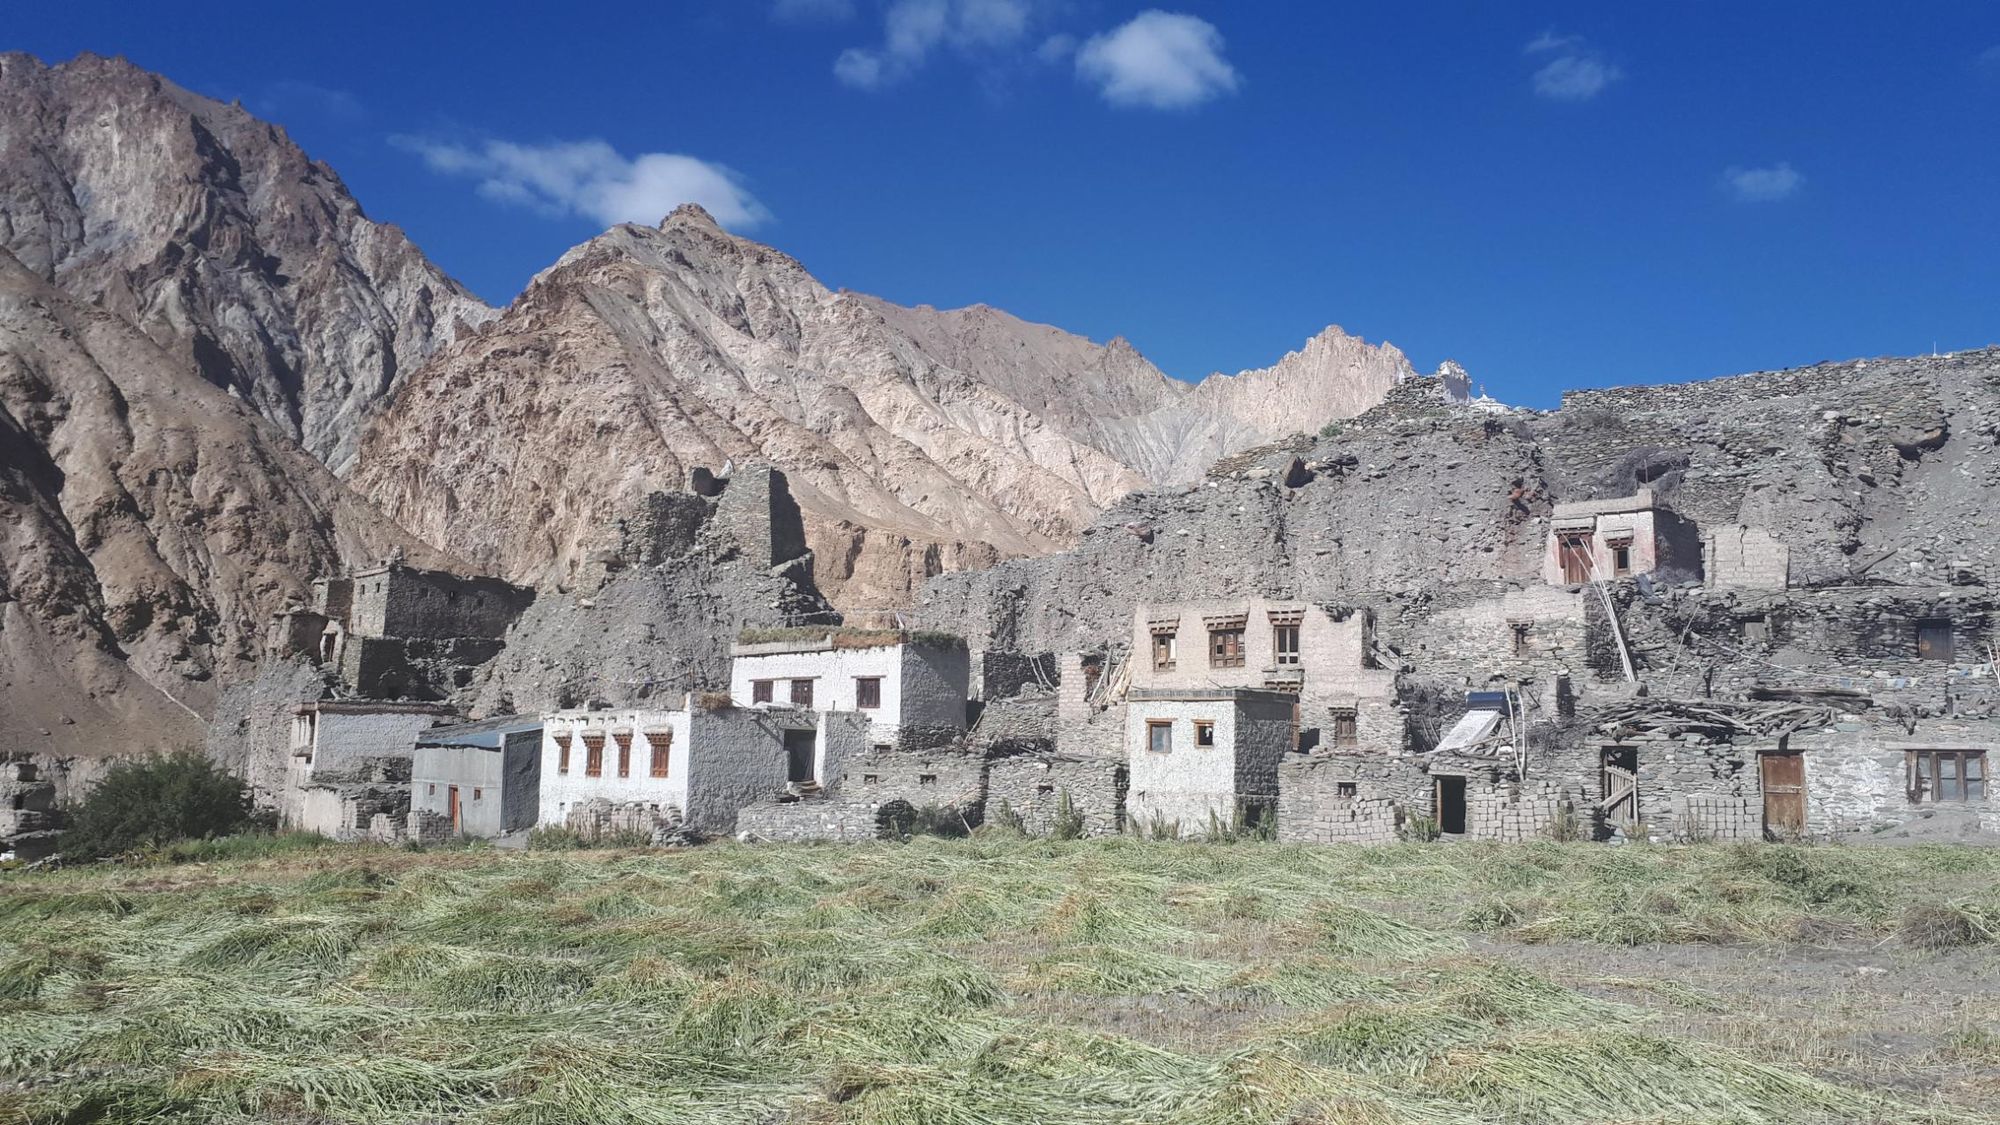 The isolated village of Hankar, in Ladakh. Photo: Dani Redd.